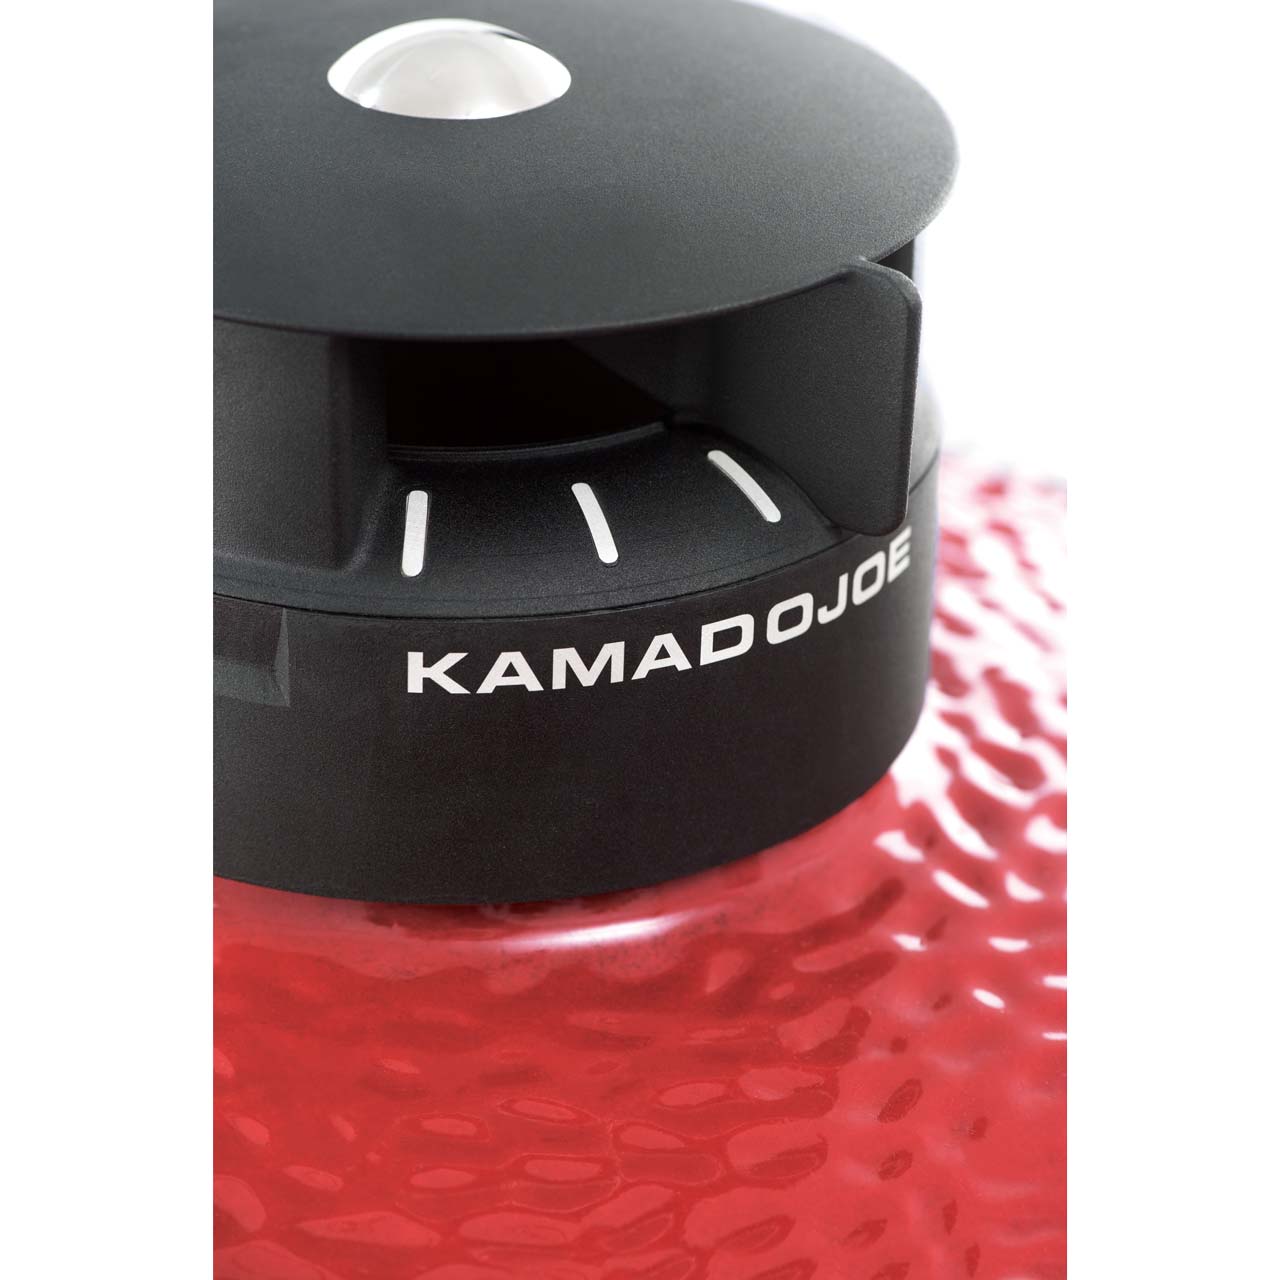 Kamado Joe - Classic II, 46 cm Edelstahlrost, Divide & Conquer Flixible Cooking System, Klappbare Seitenablagen